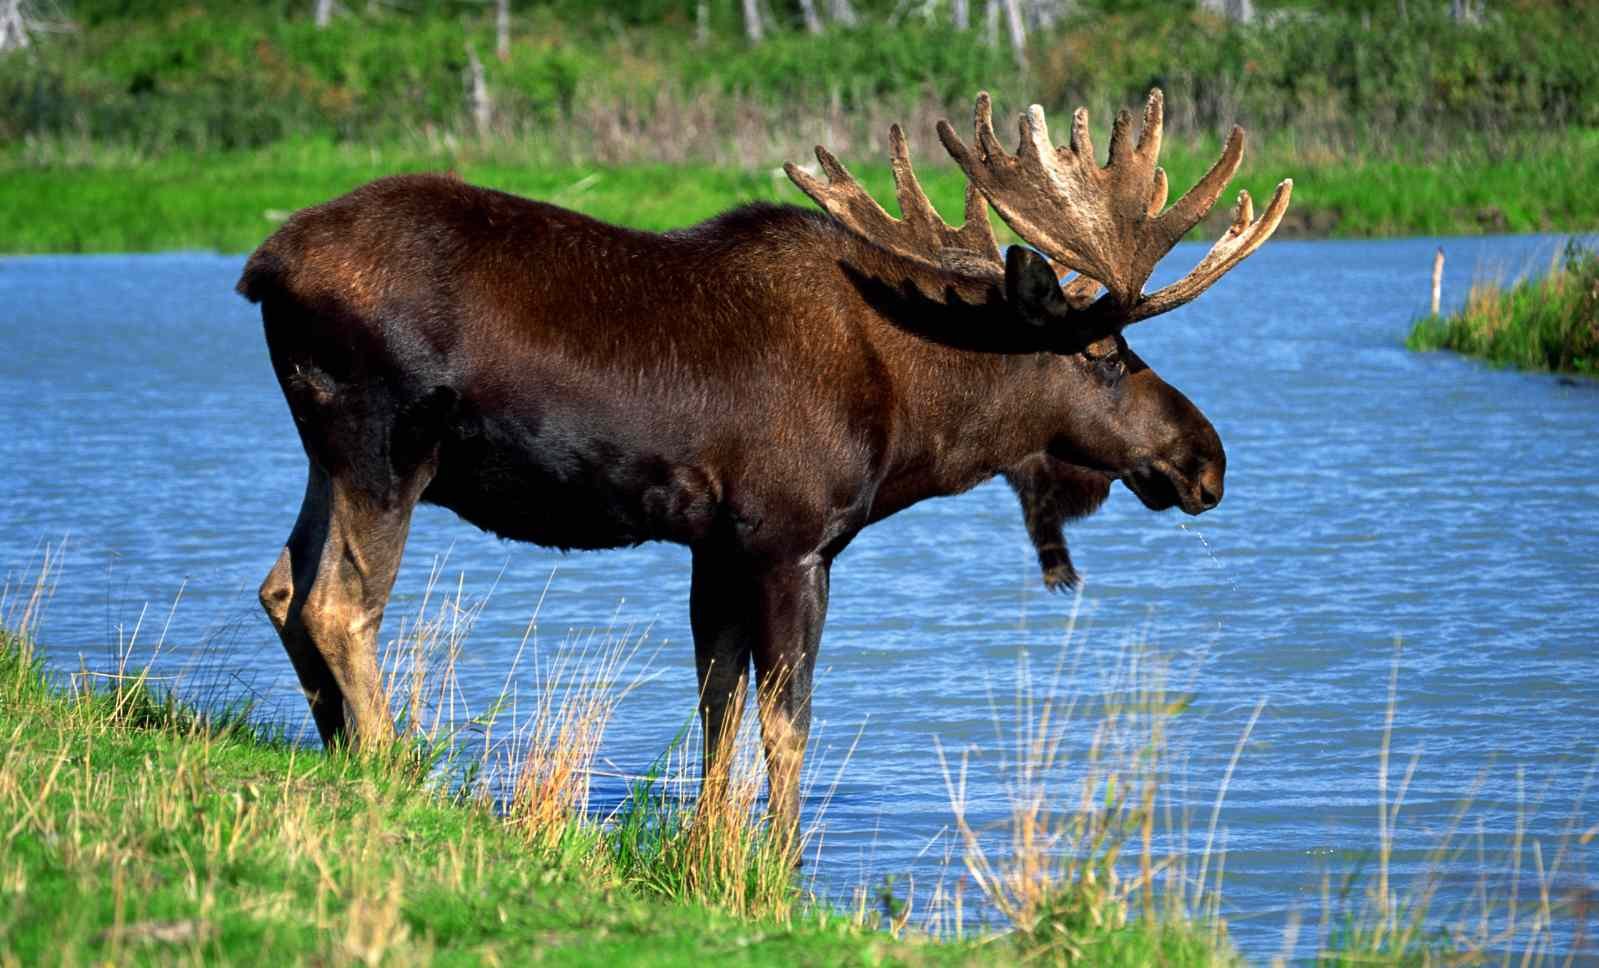 Do Moose have any predators?